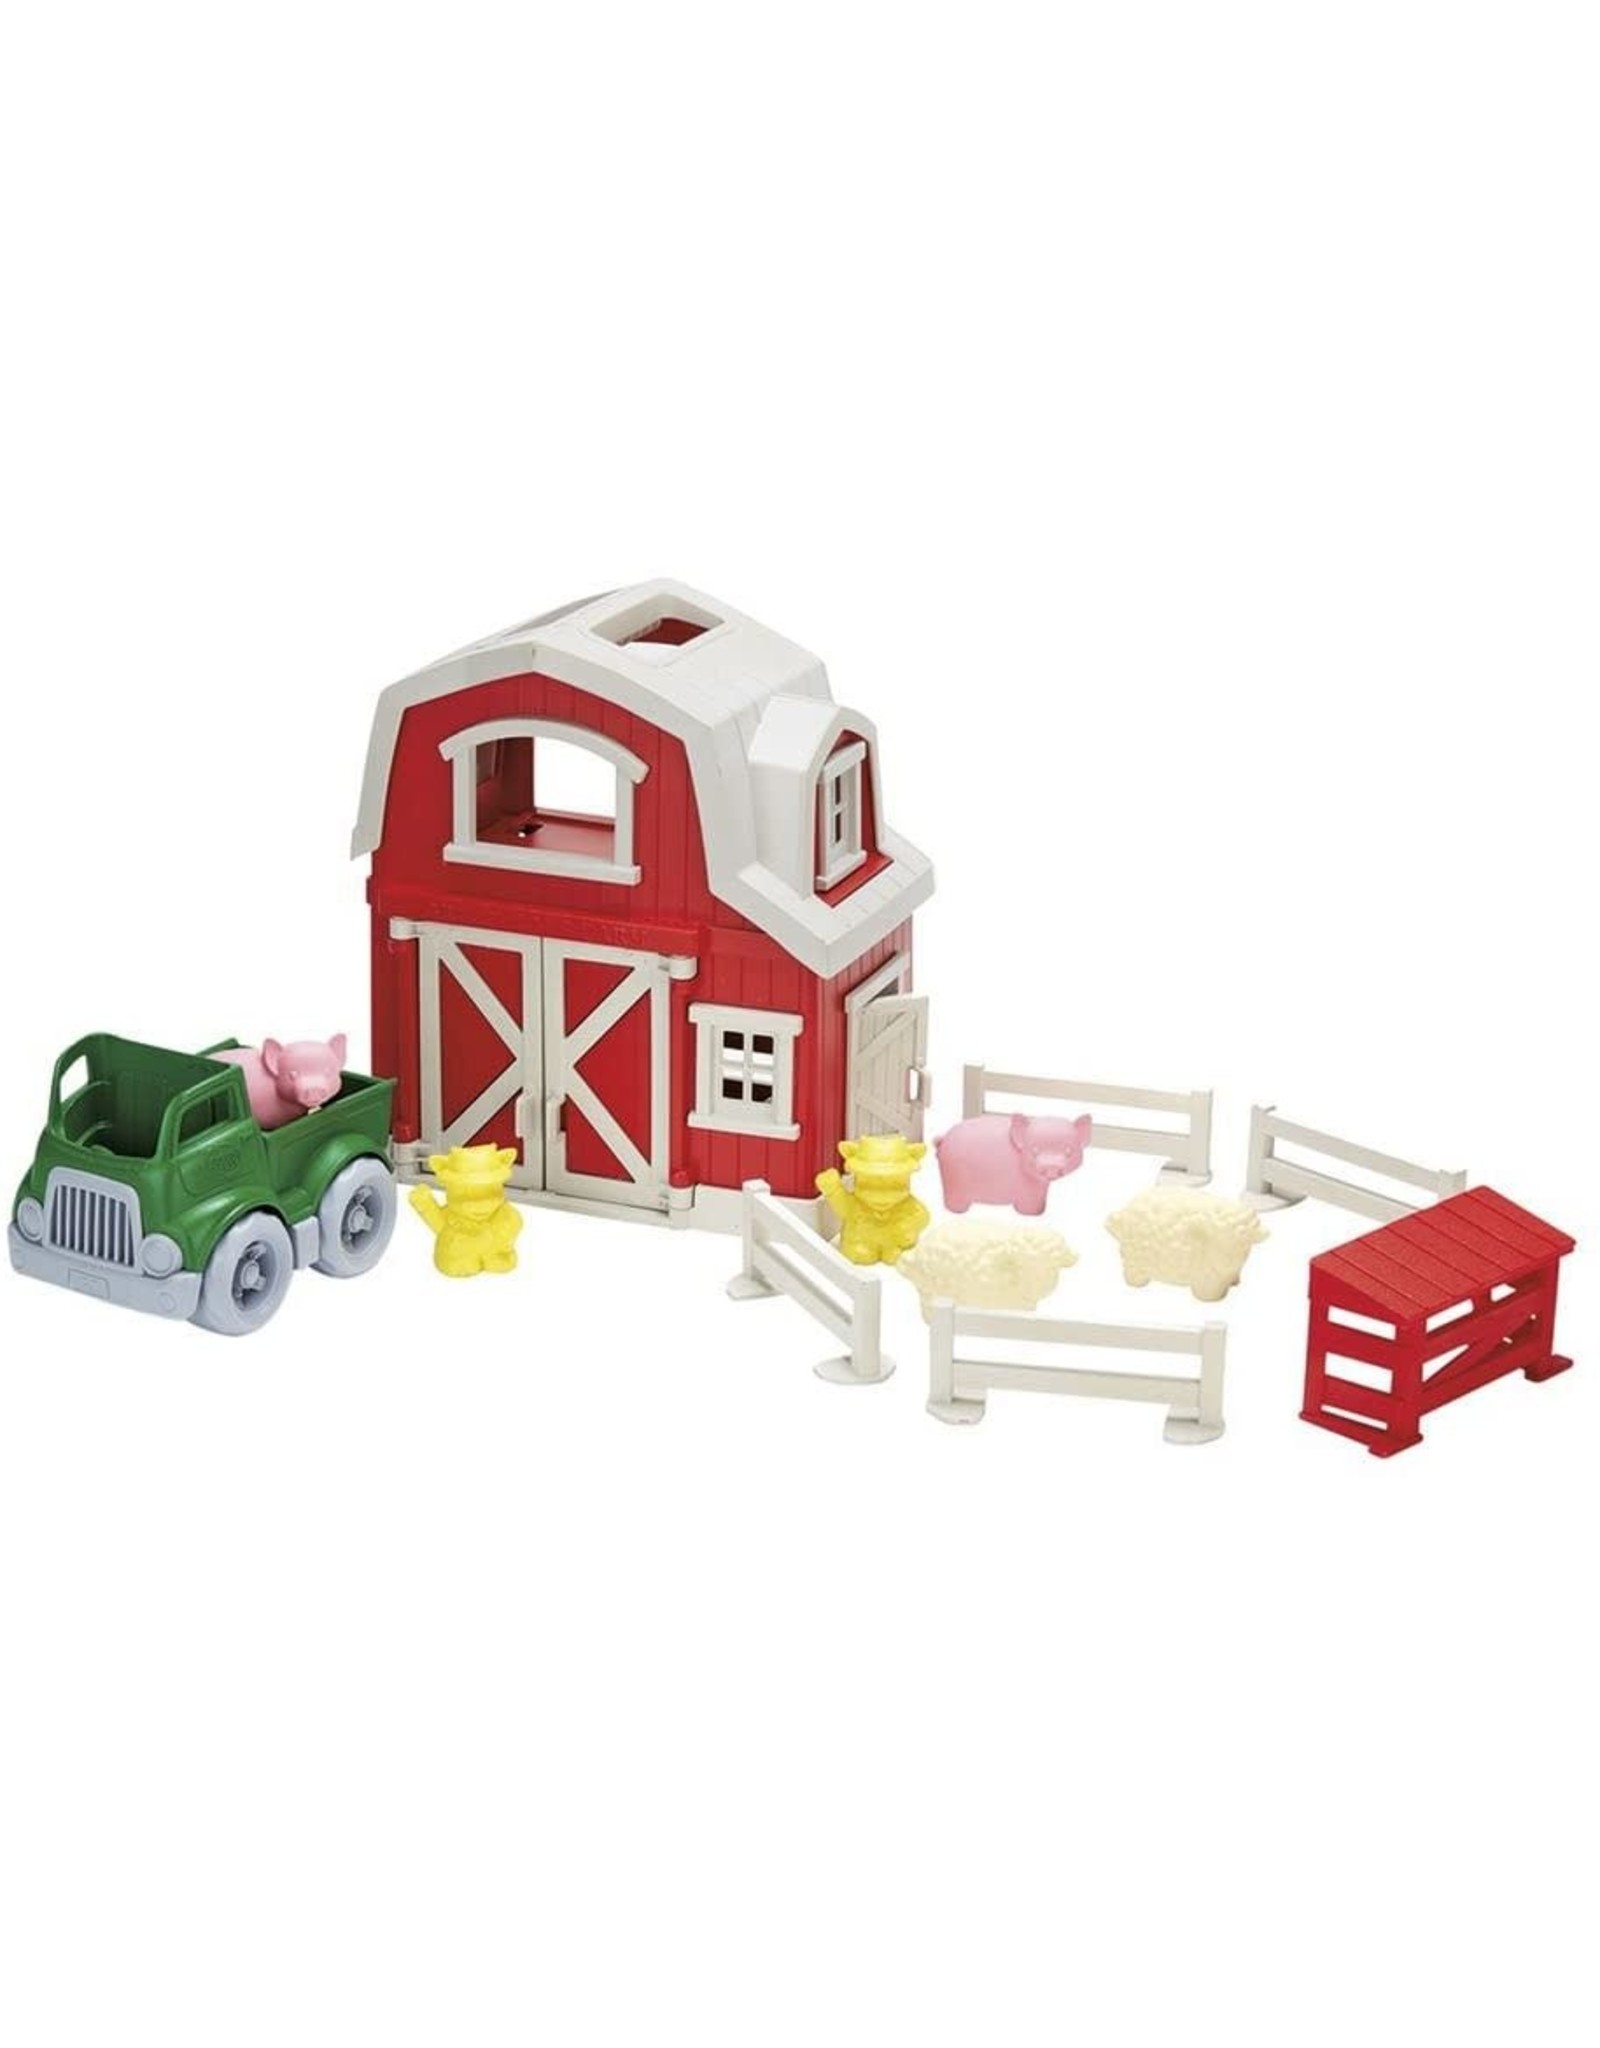 Farm Play Set